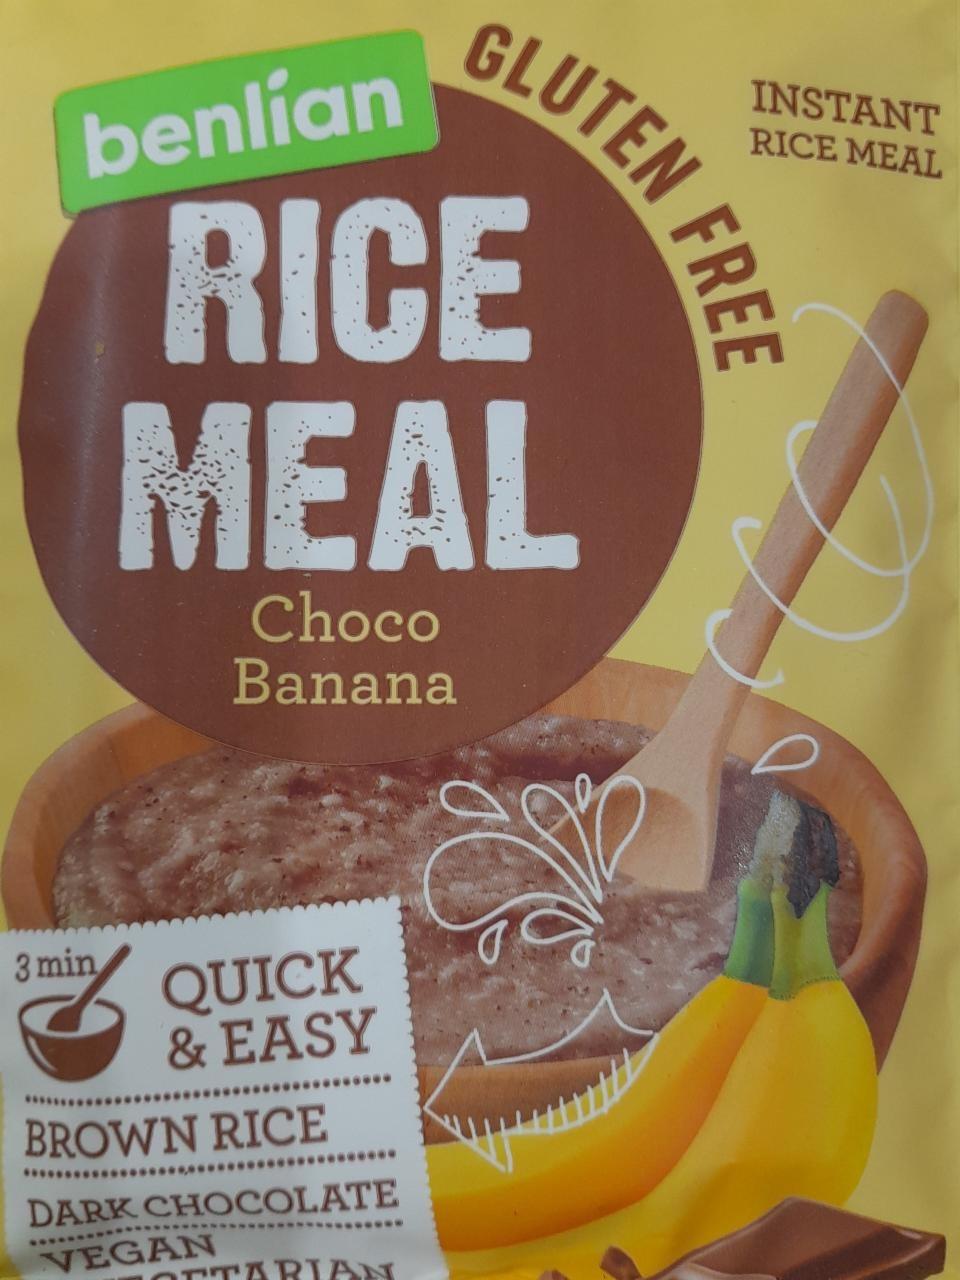 Képek - Gluten free rice meal Choco banana Benlian